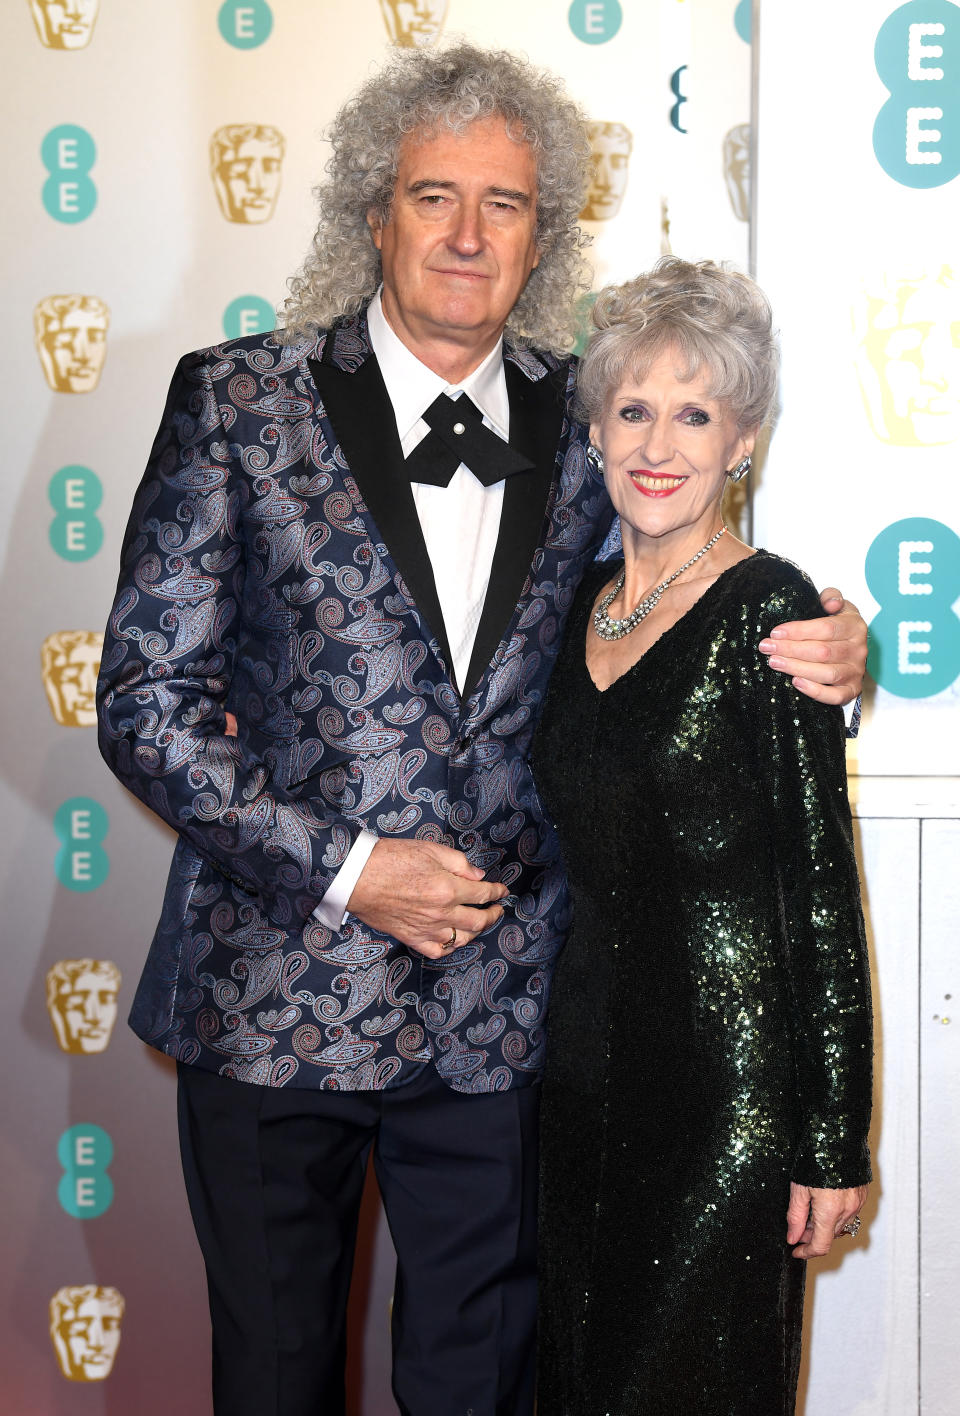 Brian May and Anita Dobson attending the 72nd British Academy Film Awards held at the Royal Albert Hall, Kensington Gore, Kensington, London